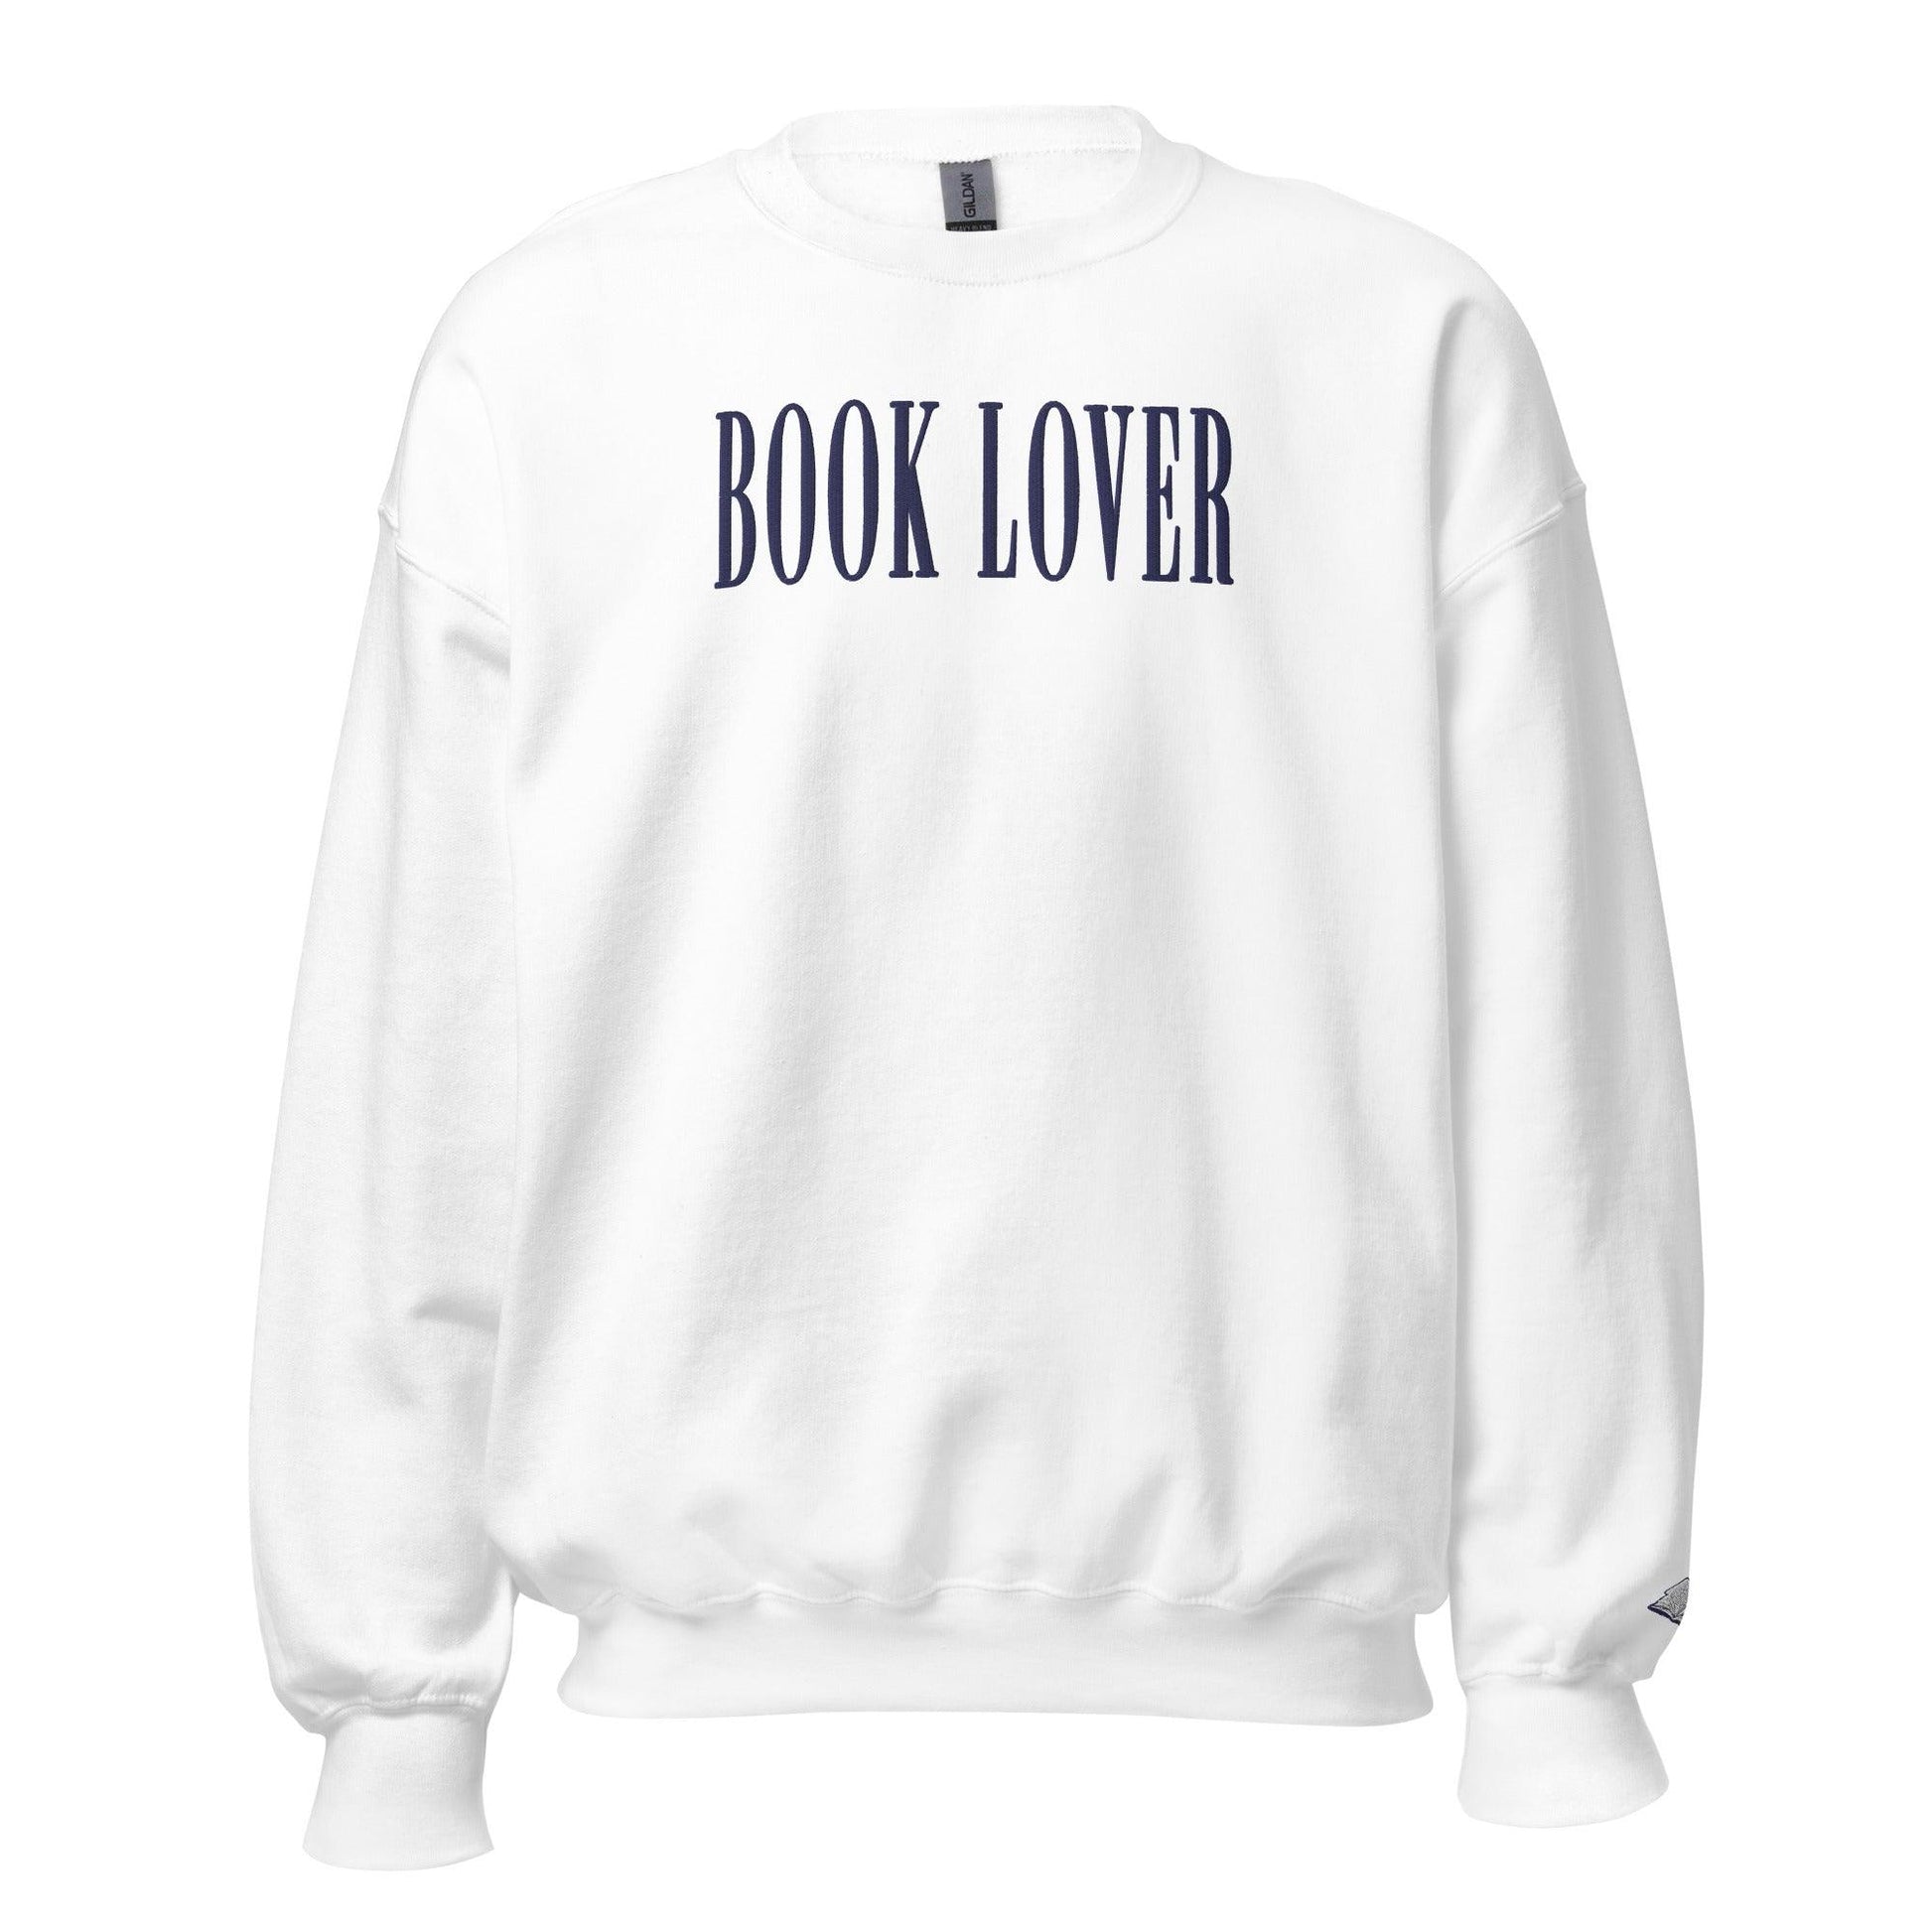 Book Lover Embroidered Sweatshirt - The Bean Workshop - book lover, bookish, embroidered, minimalistic, sweatshirt